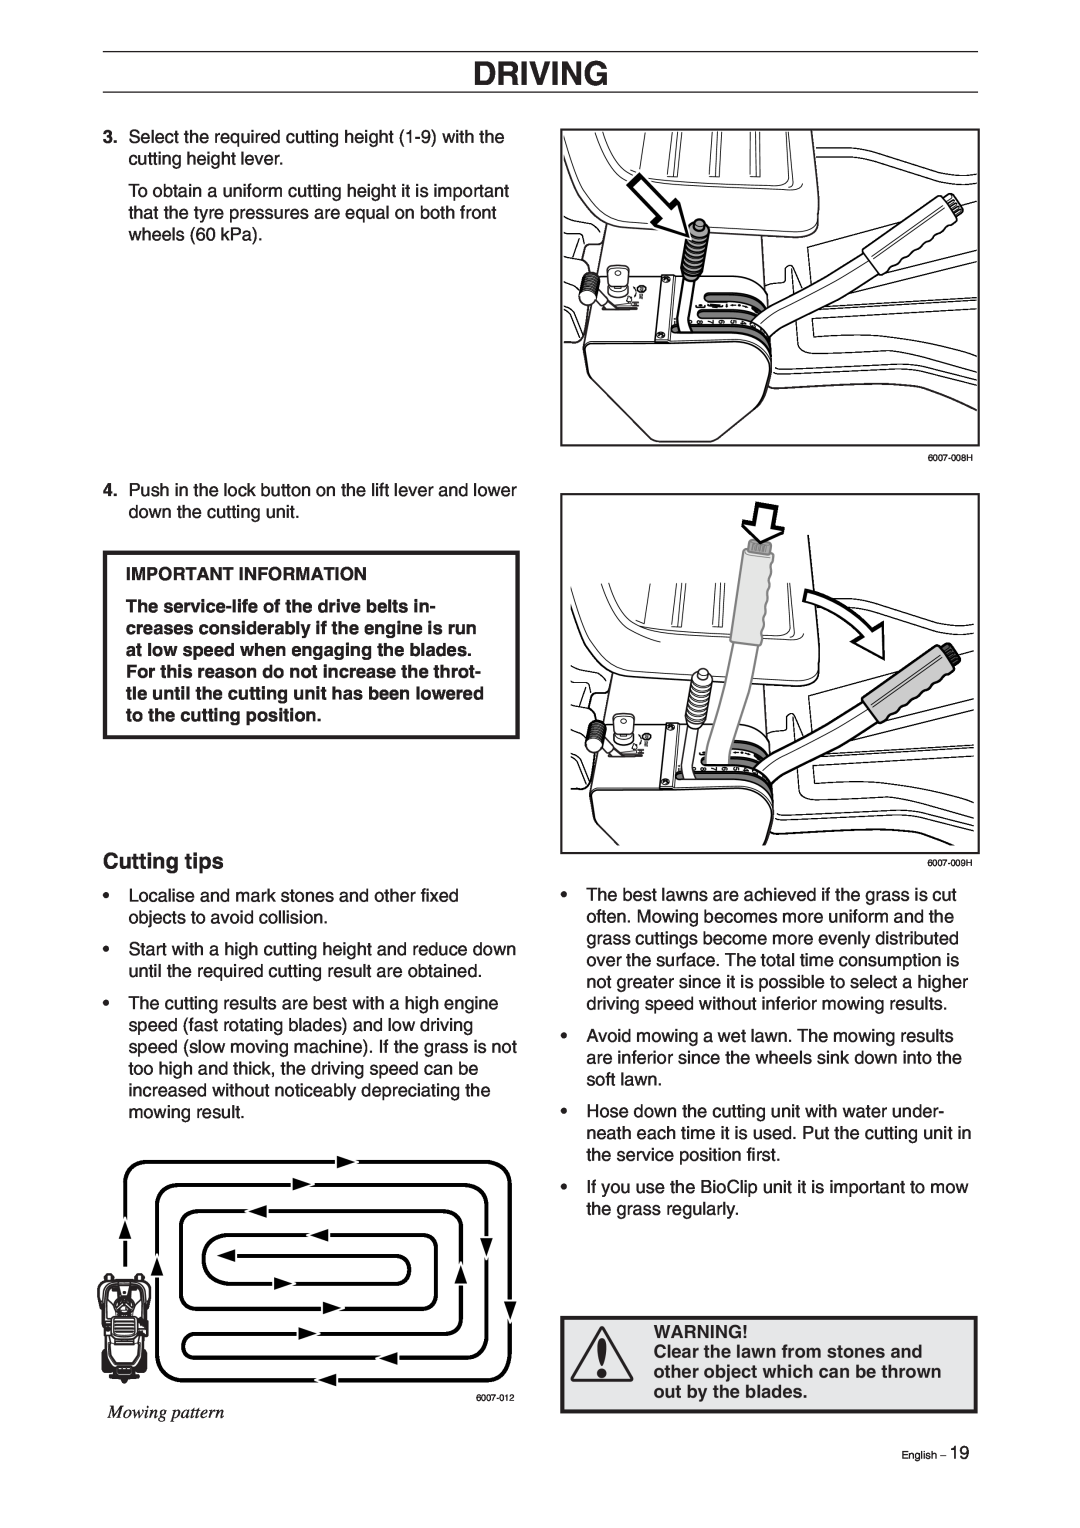 Husqvarna 11, 13, 11 Bio, 13 Bio manual Cutting tips, Mowing pattern, Driving, Important Information 